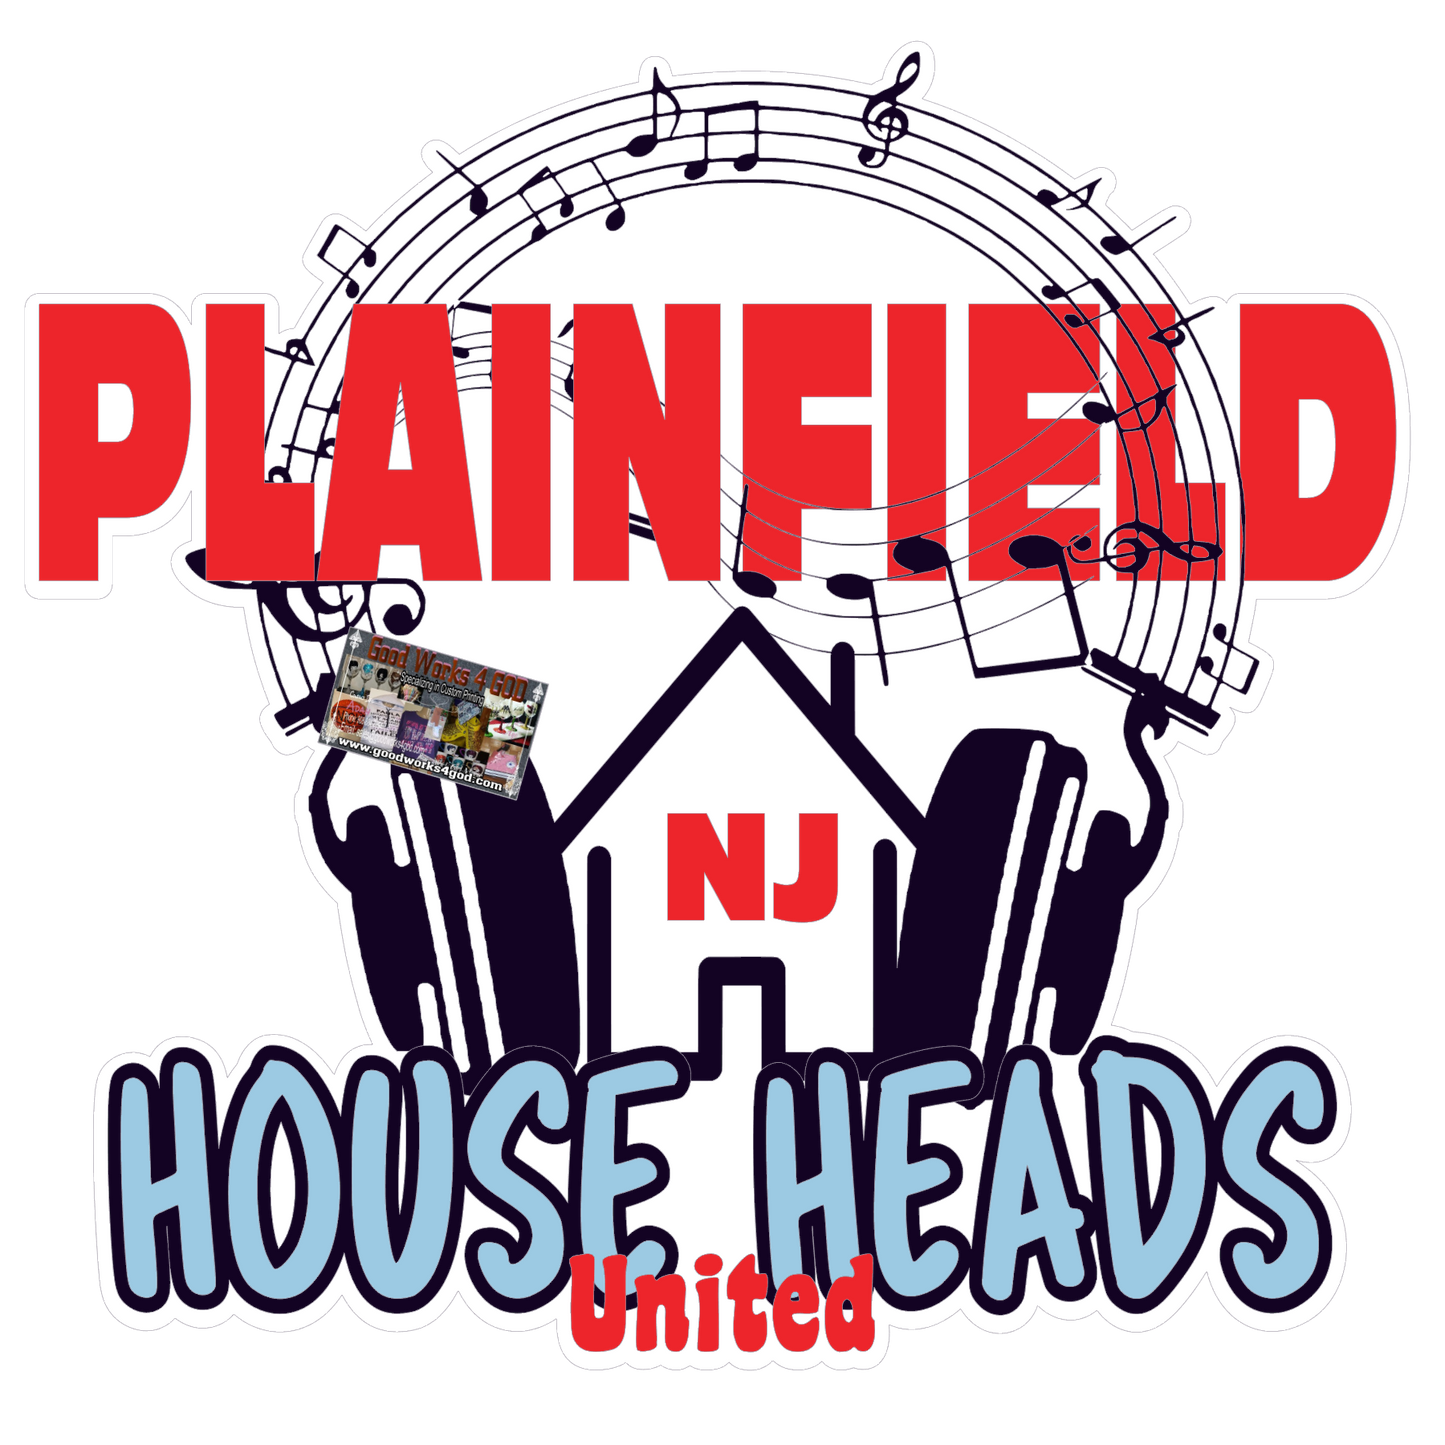 Plainfield House Heads United